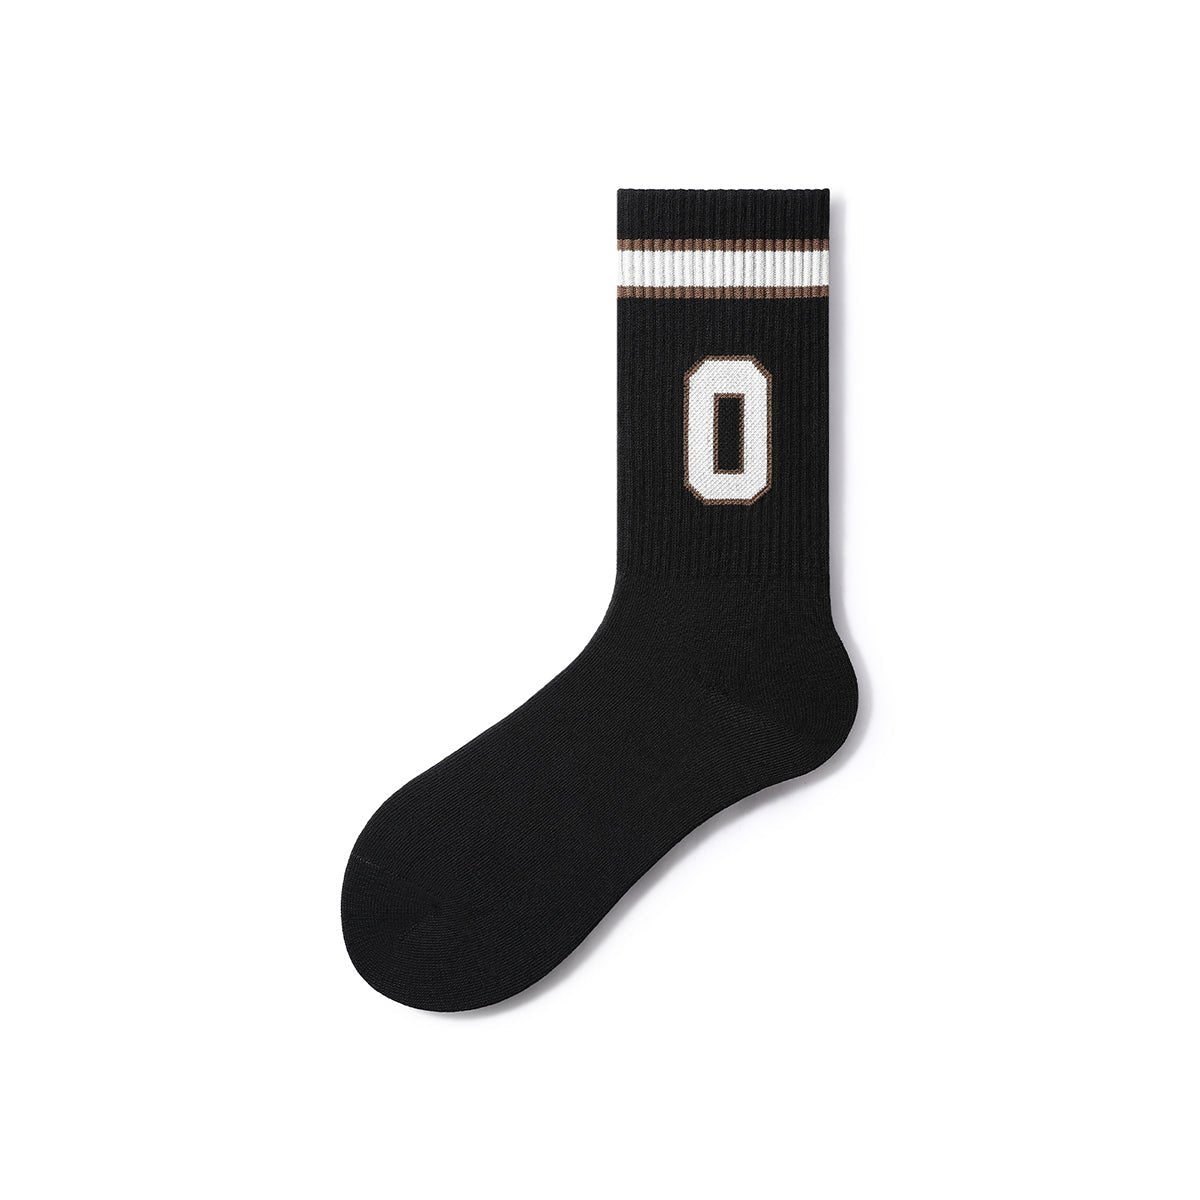 Retro Reminder All-season Unisex 5pcs Active Crew Socks Set - 0cm